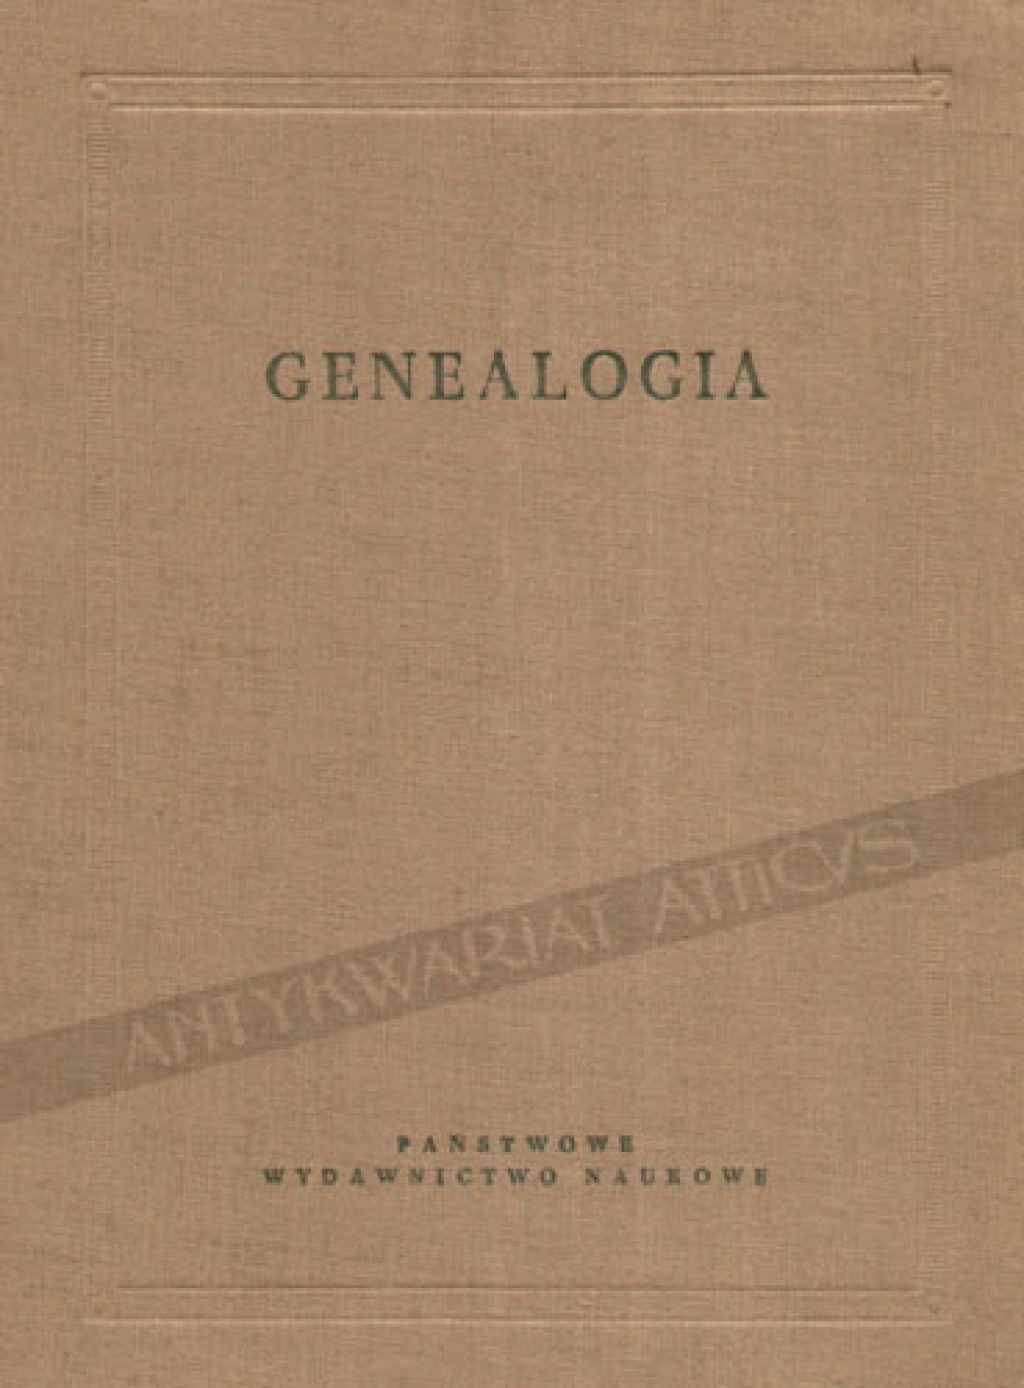 Genealogia [t. II - tablice]